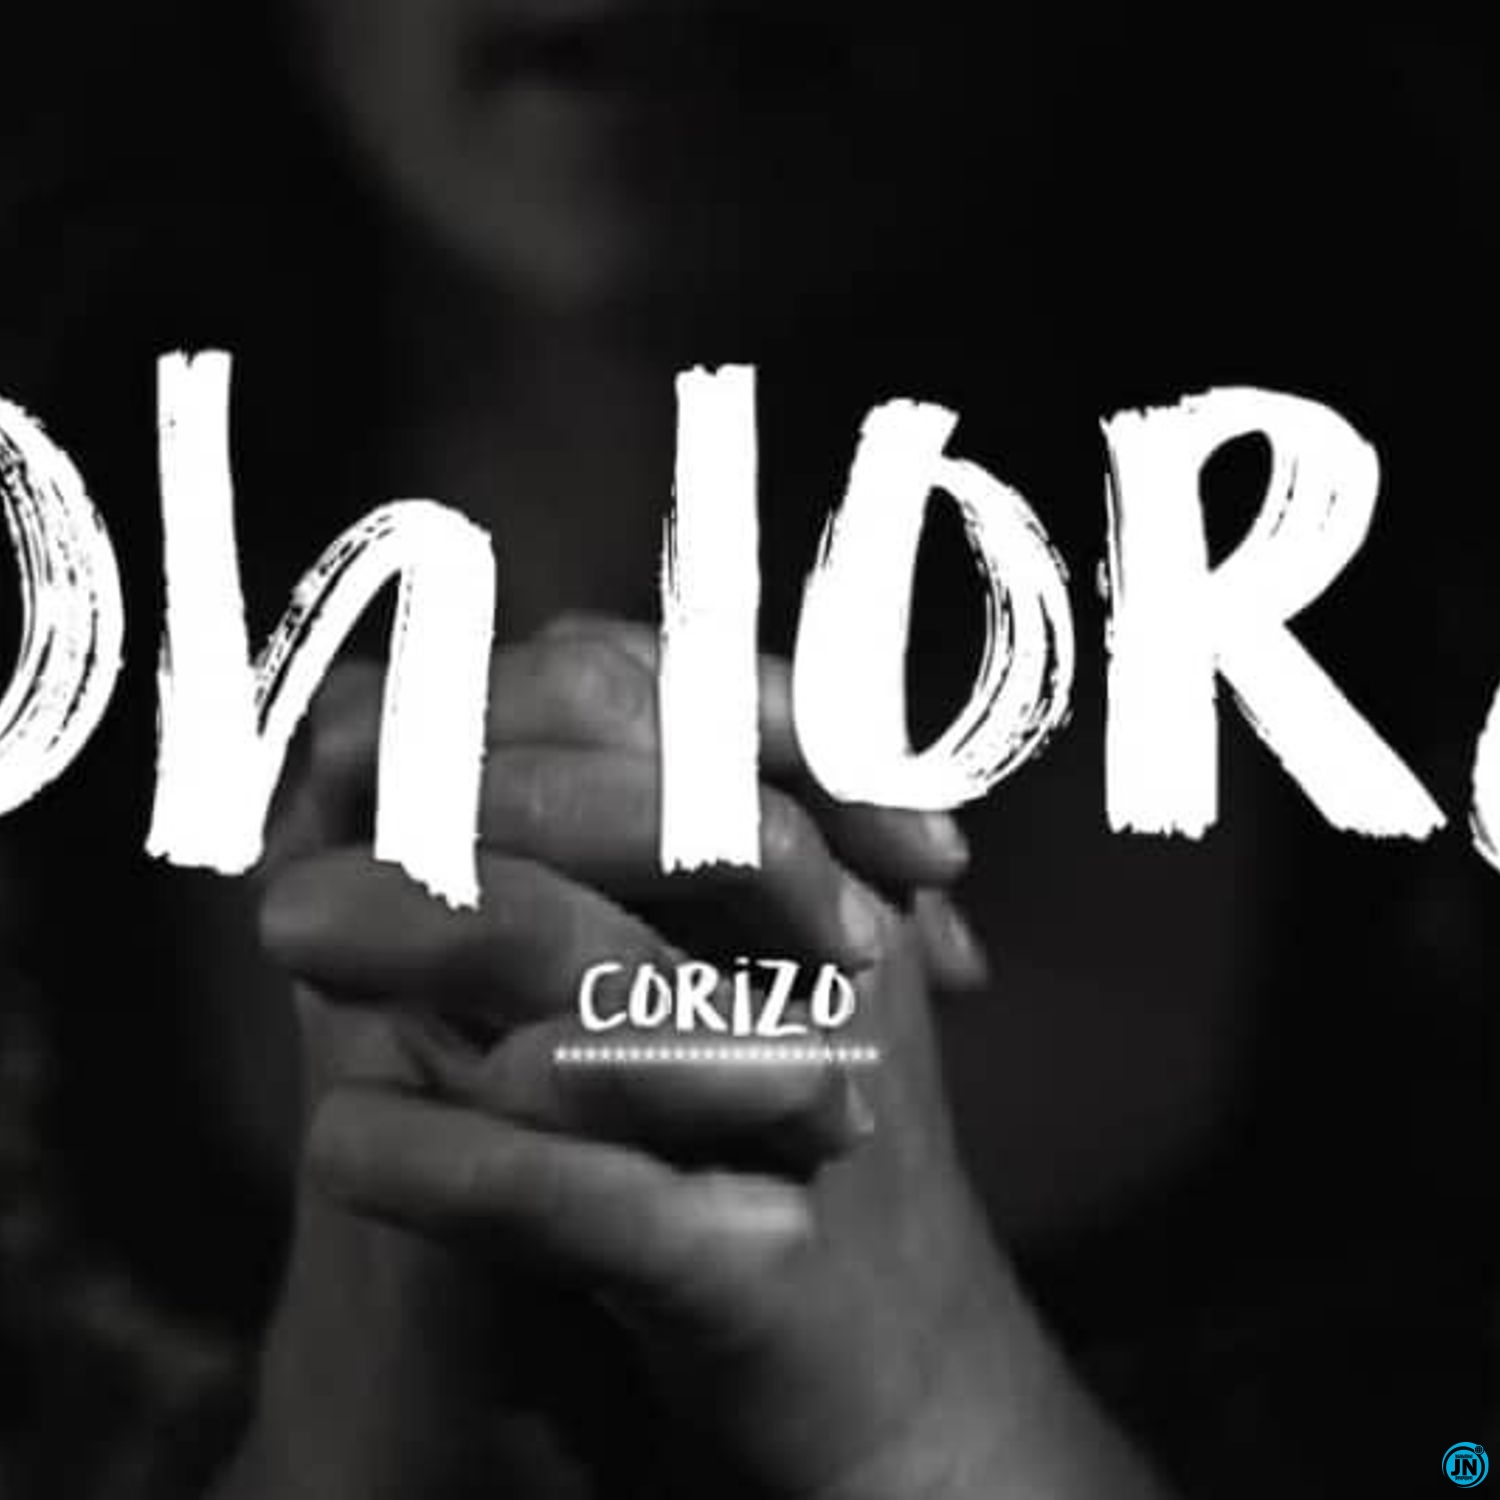 Corizo - Oh Lord   Mp3 Download lyrics